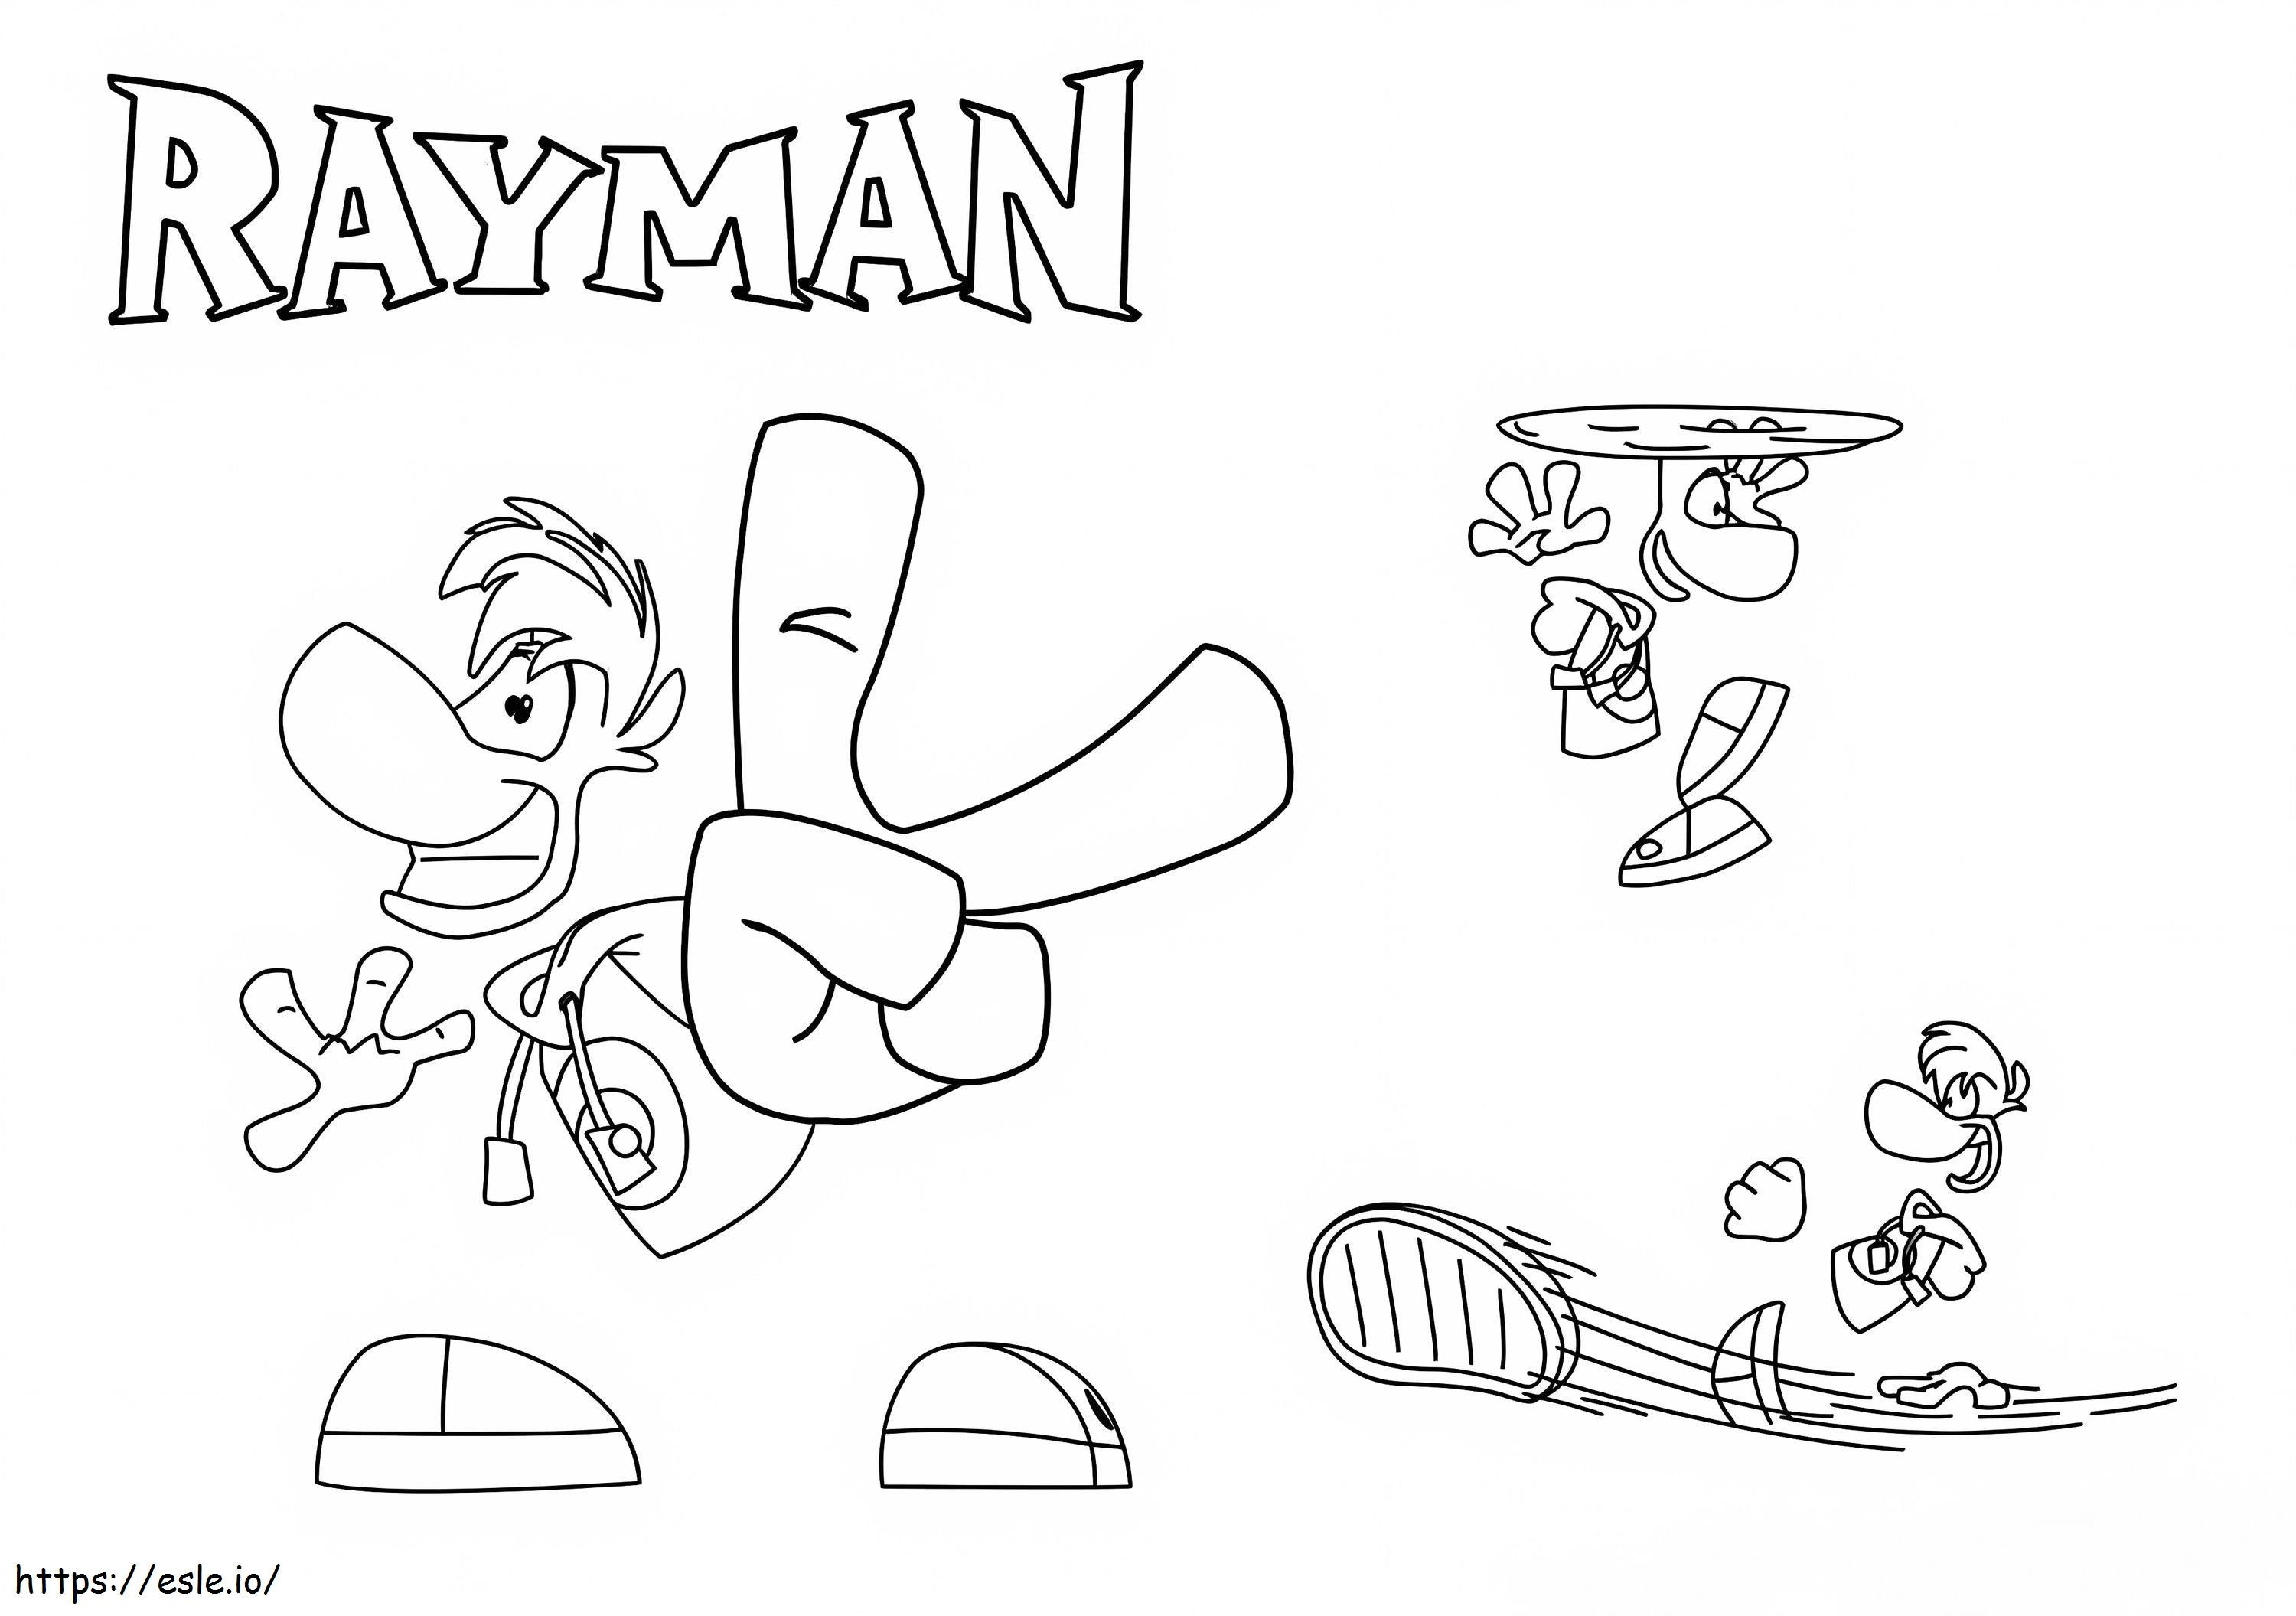 Coloriage Rayman1 à imprimer dessin